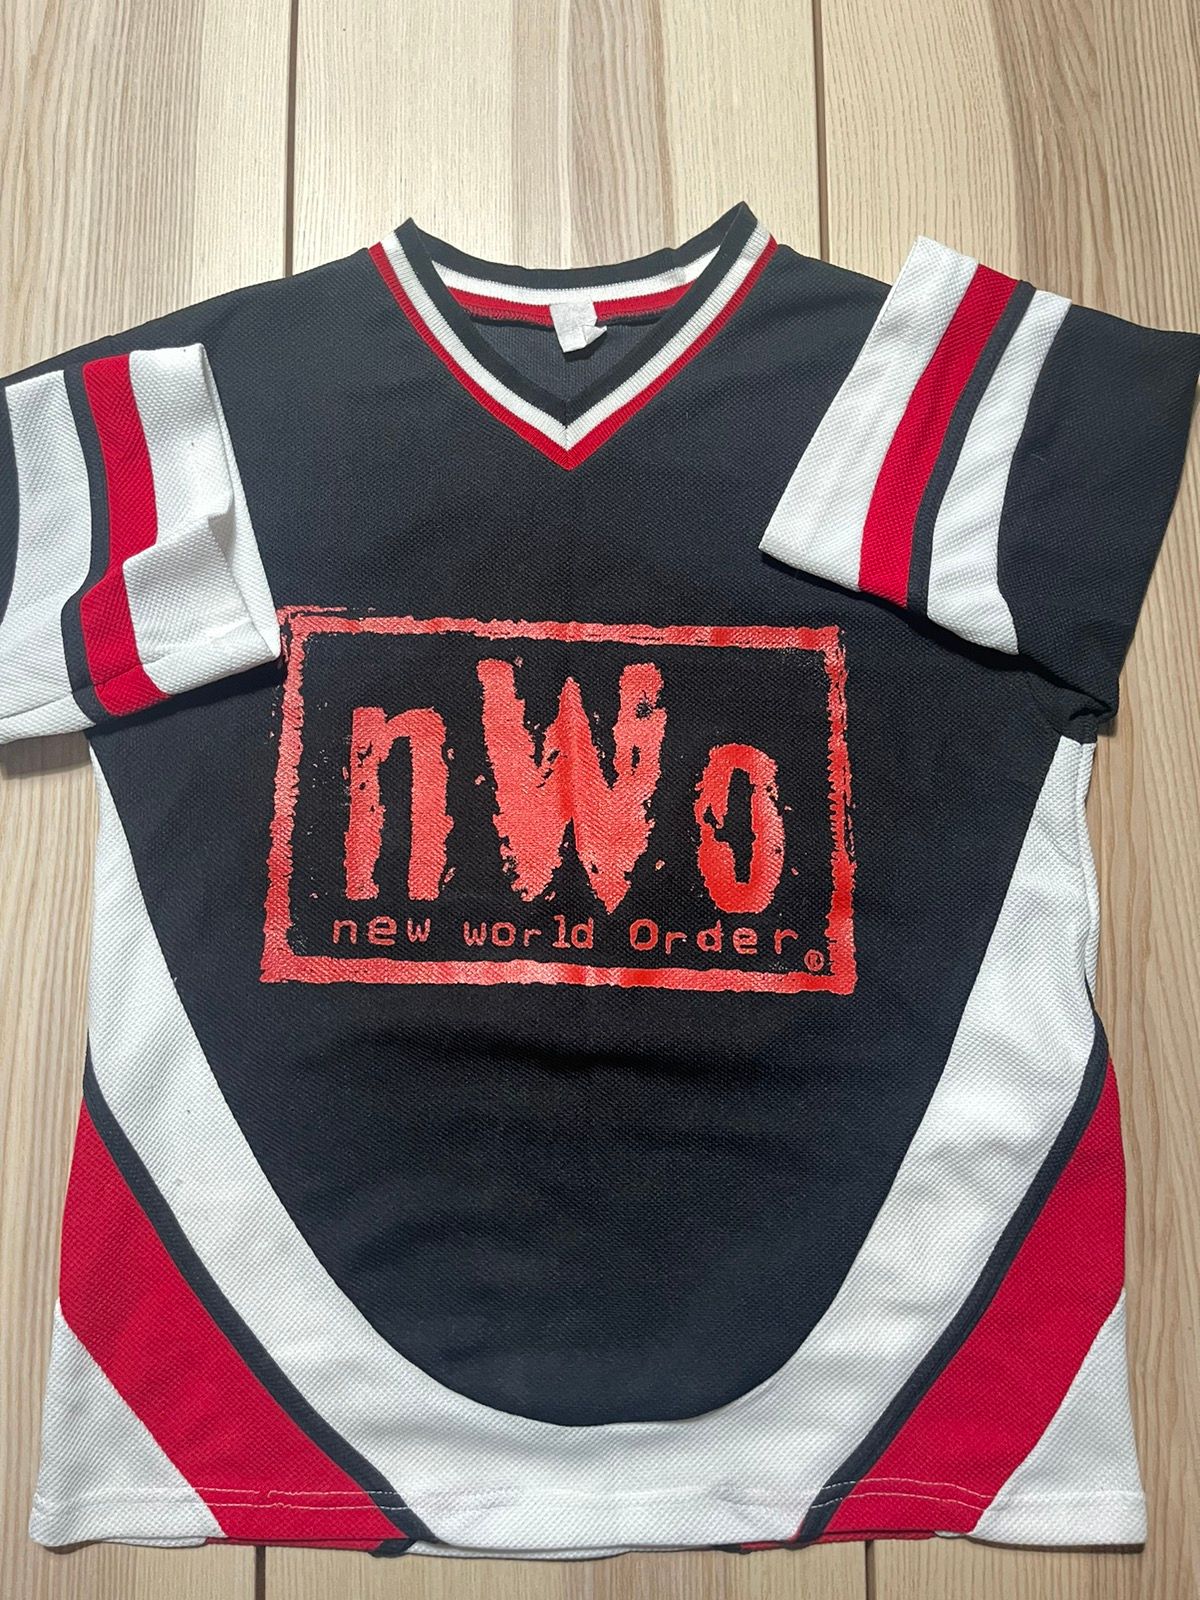 Vintage Vintage NWO “Wolf Pack” 4 Life WCW Wrestling Hockey Jersey Size US L / EU 52-54 / 3 - 1 Preview